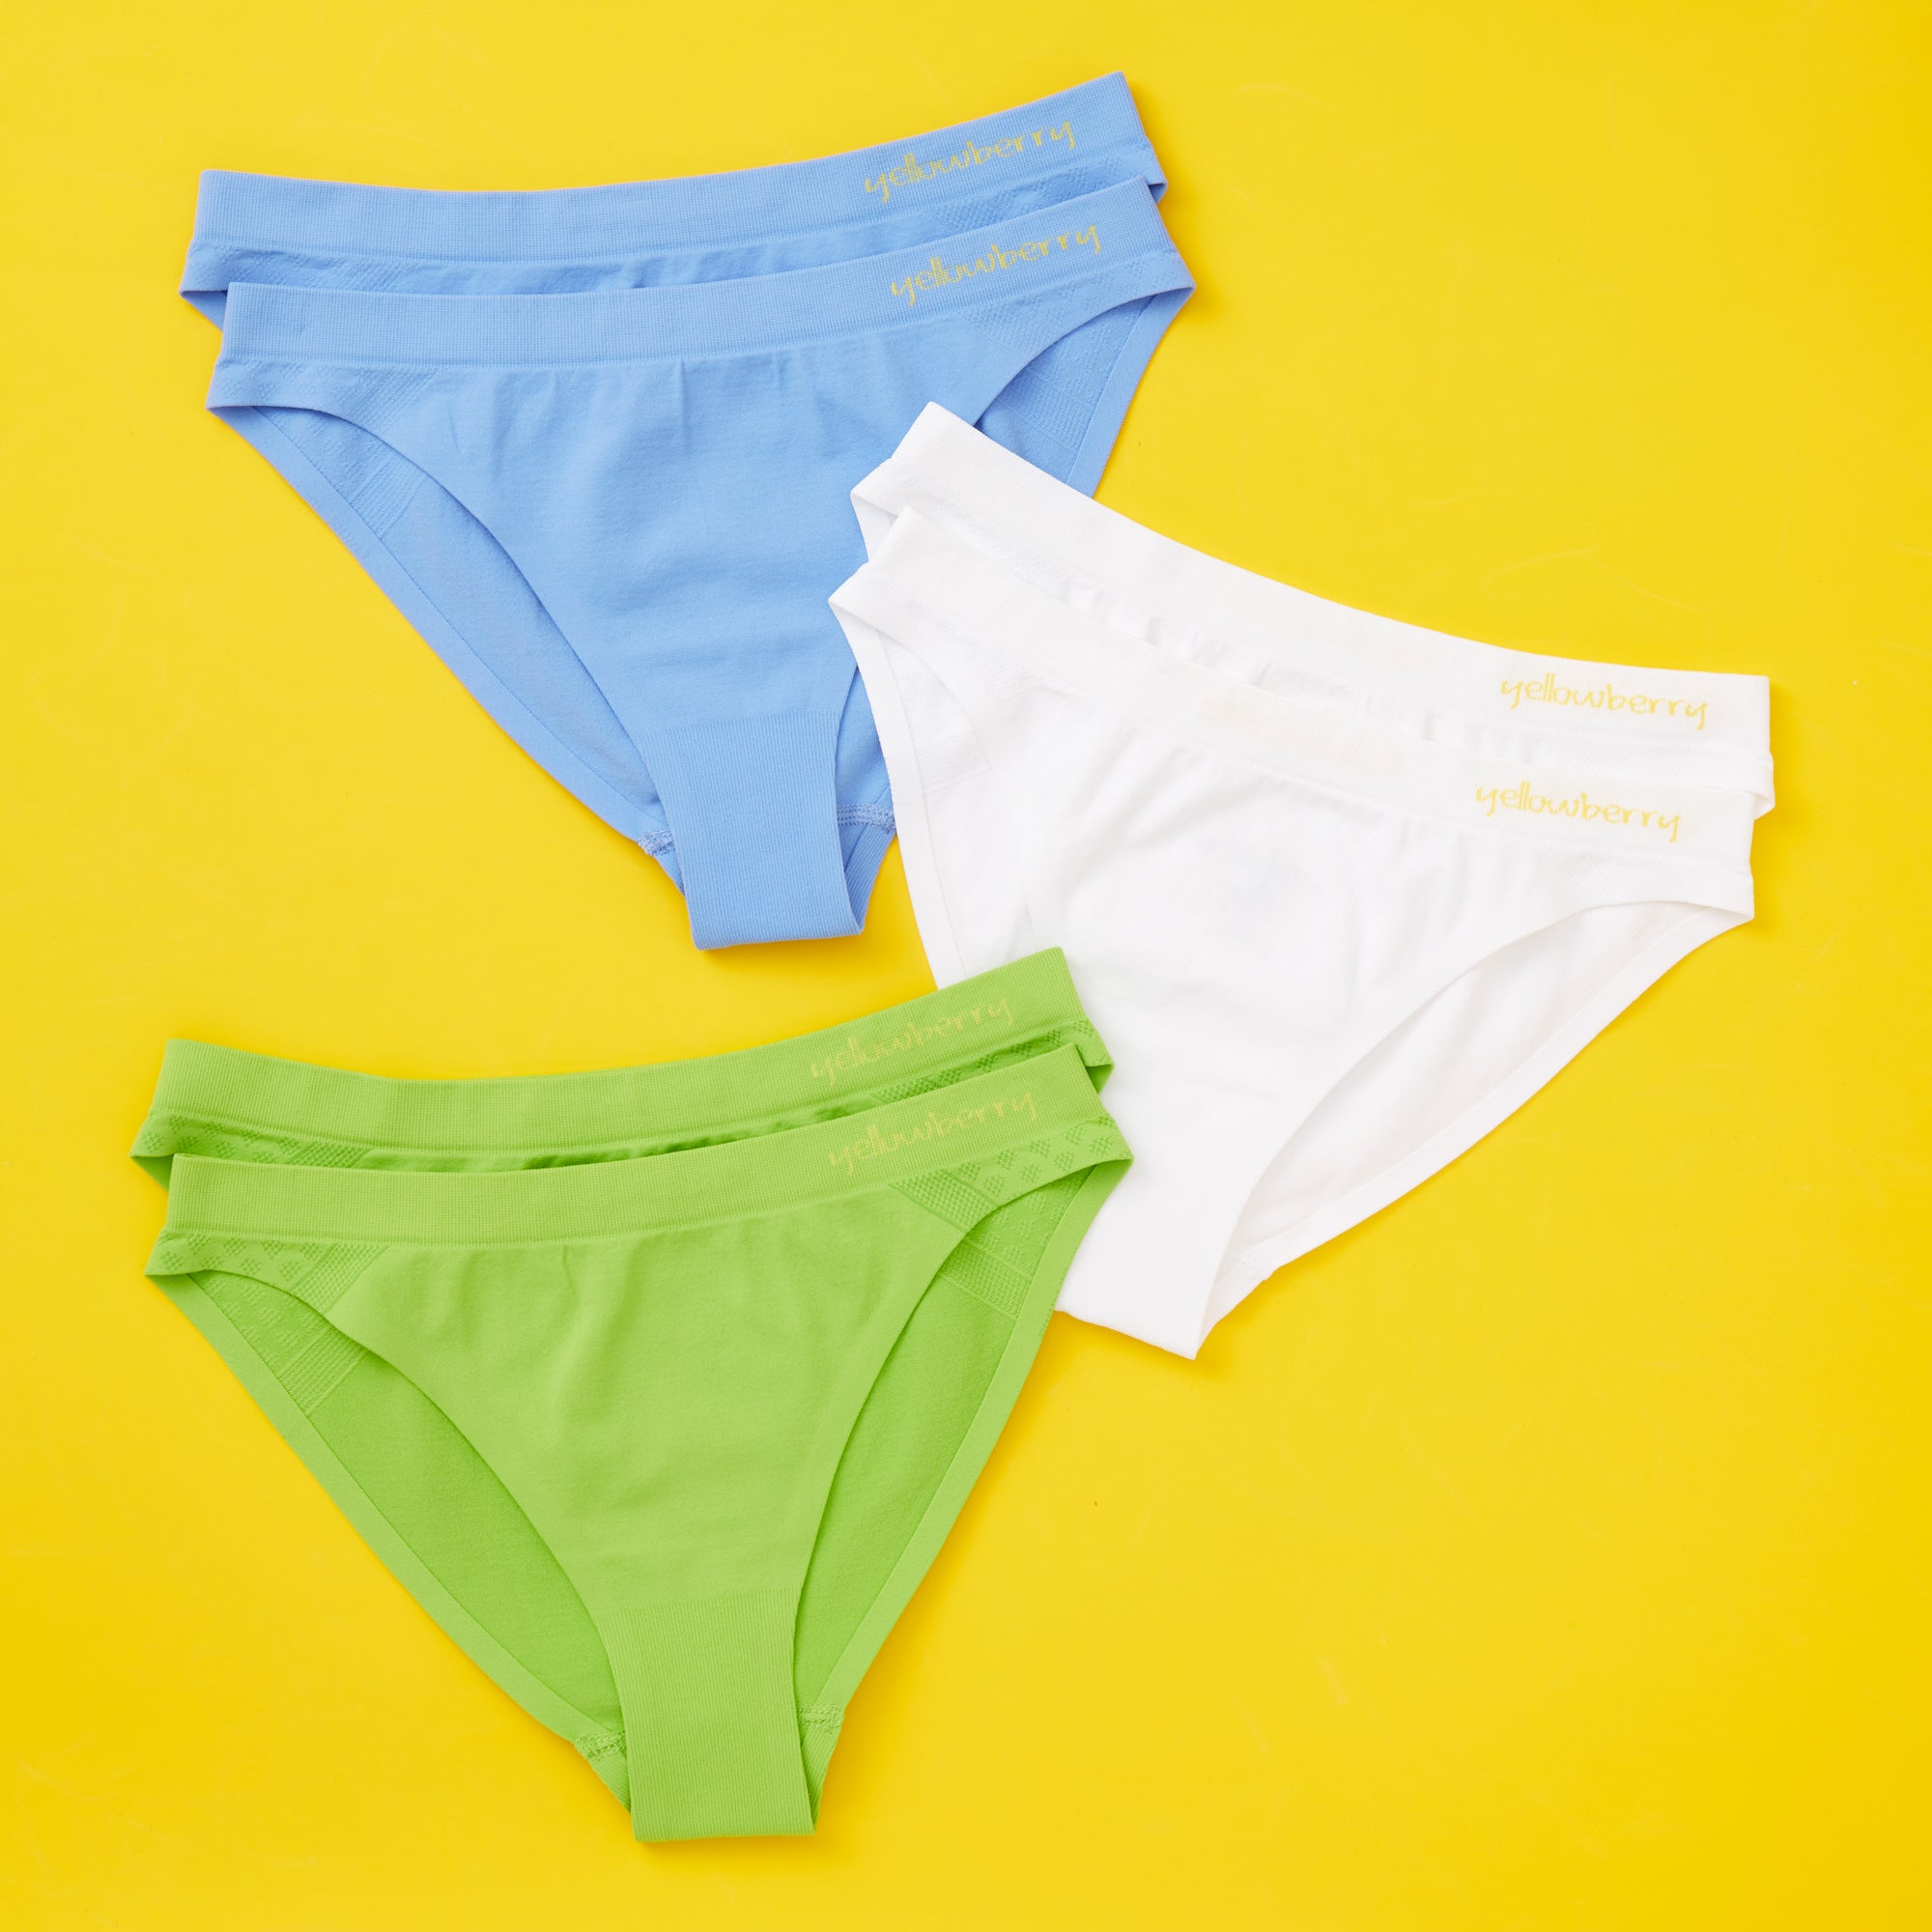 Yellowberry Girls 6pk Quality Seamless Hipster Breif Underwear